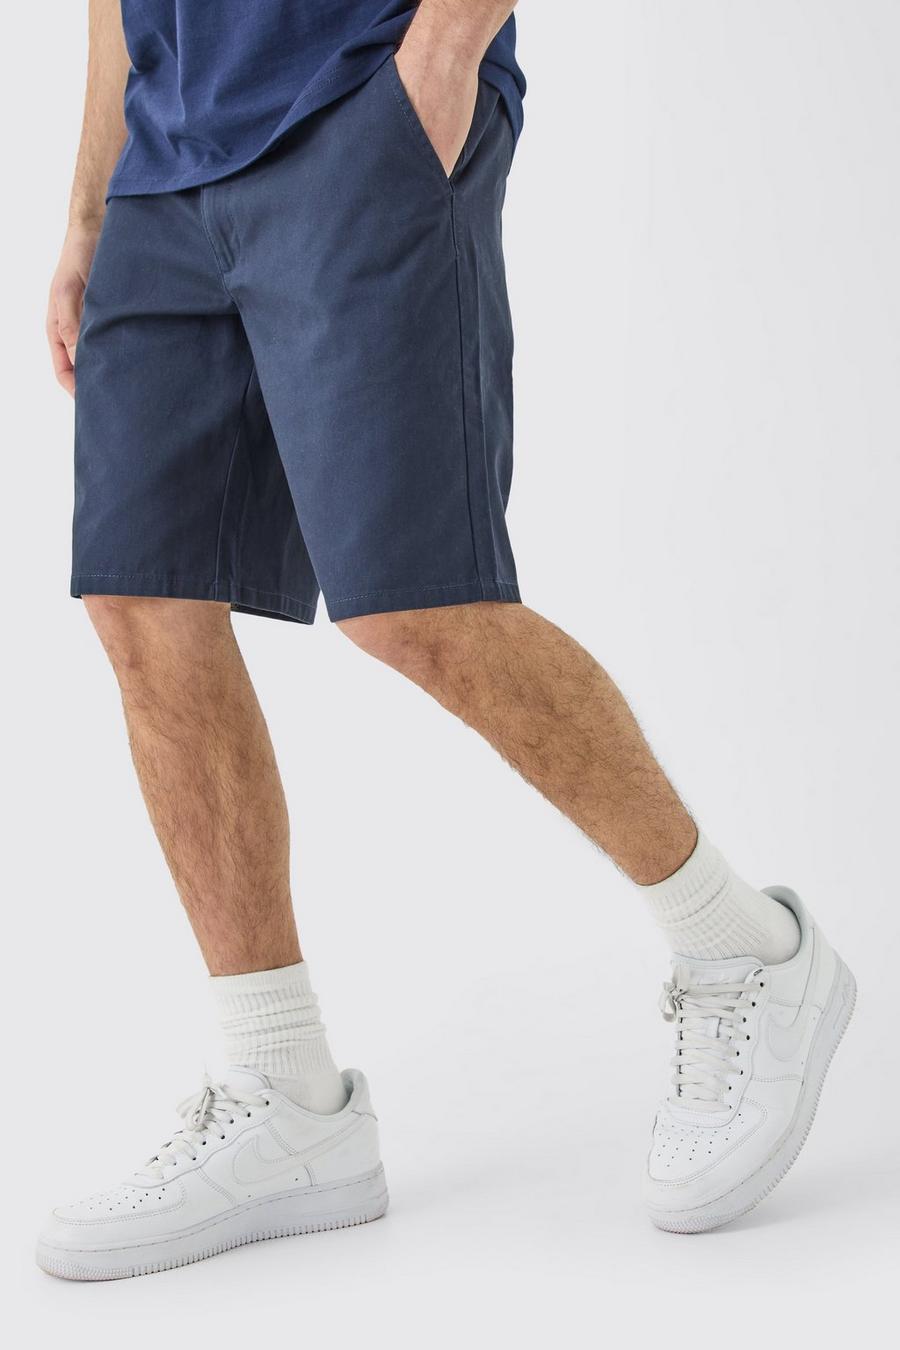 Lockere dunkelblaue Shorts, Navy